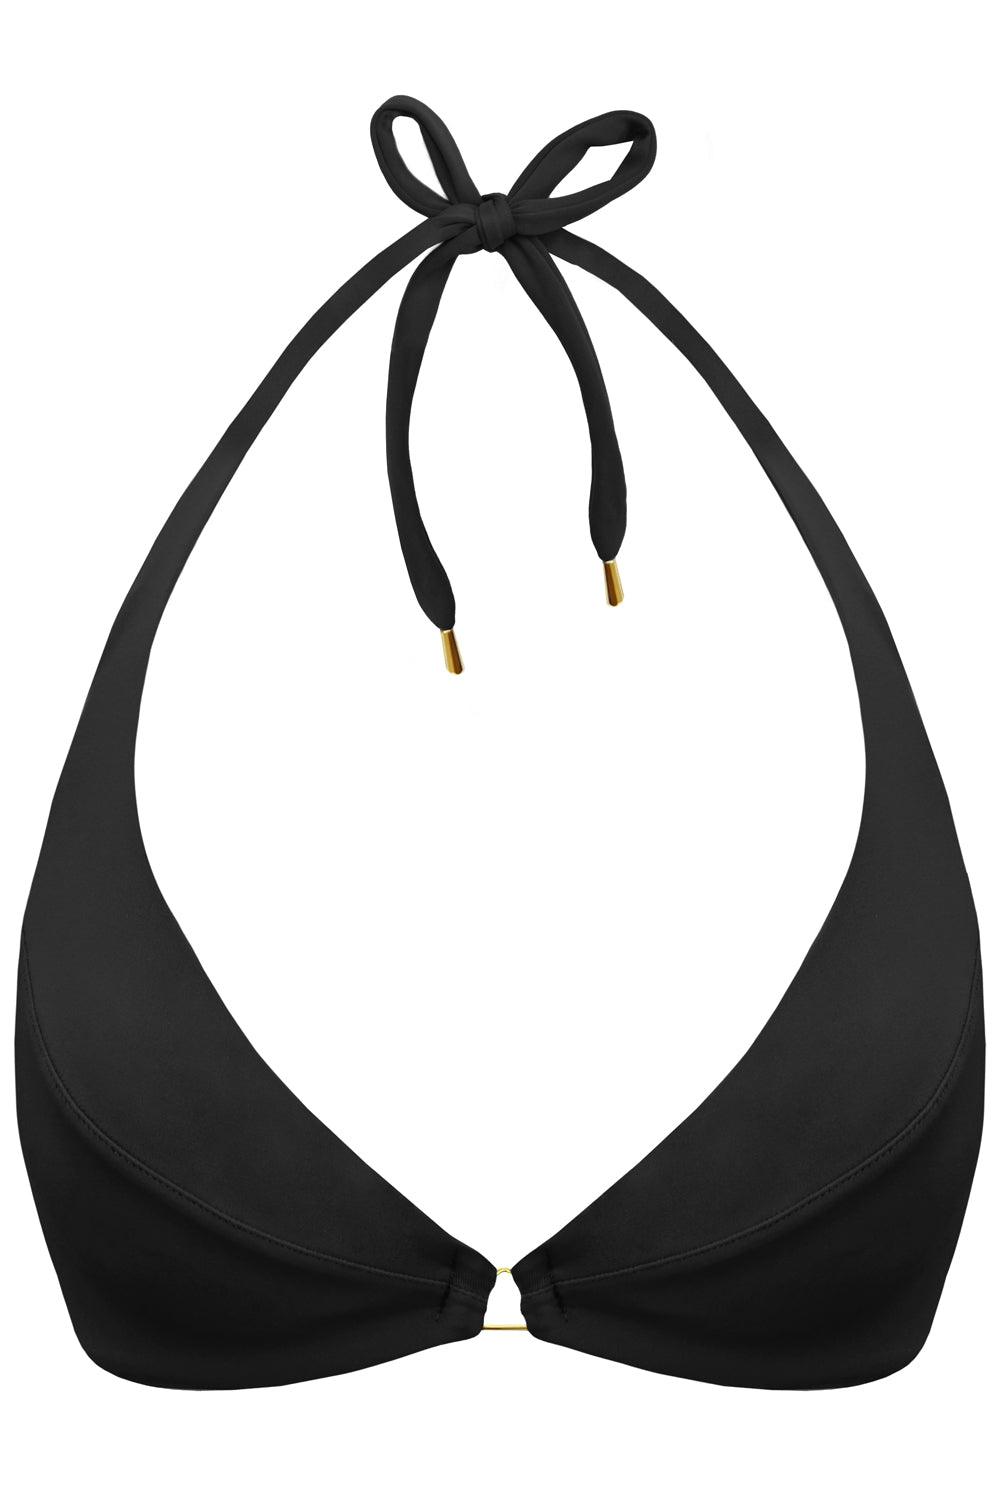 Radiya Black bikini top - Bikini top by yesUndress. Shop on yesUndress